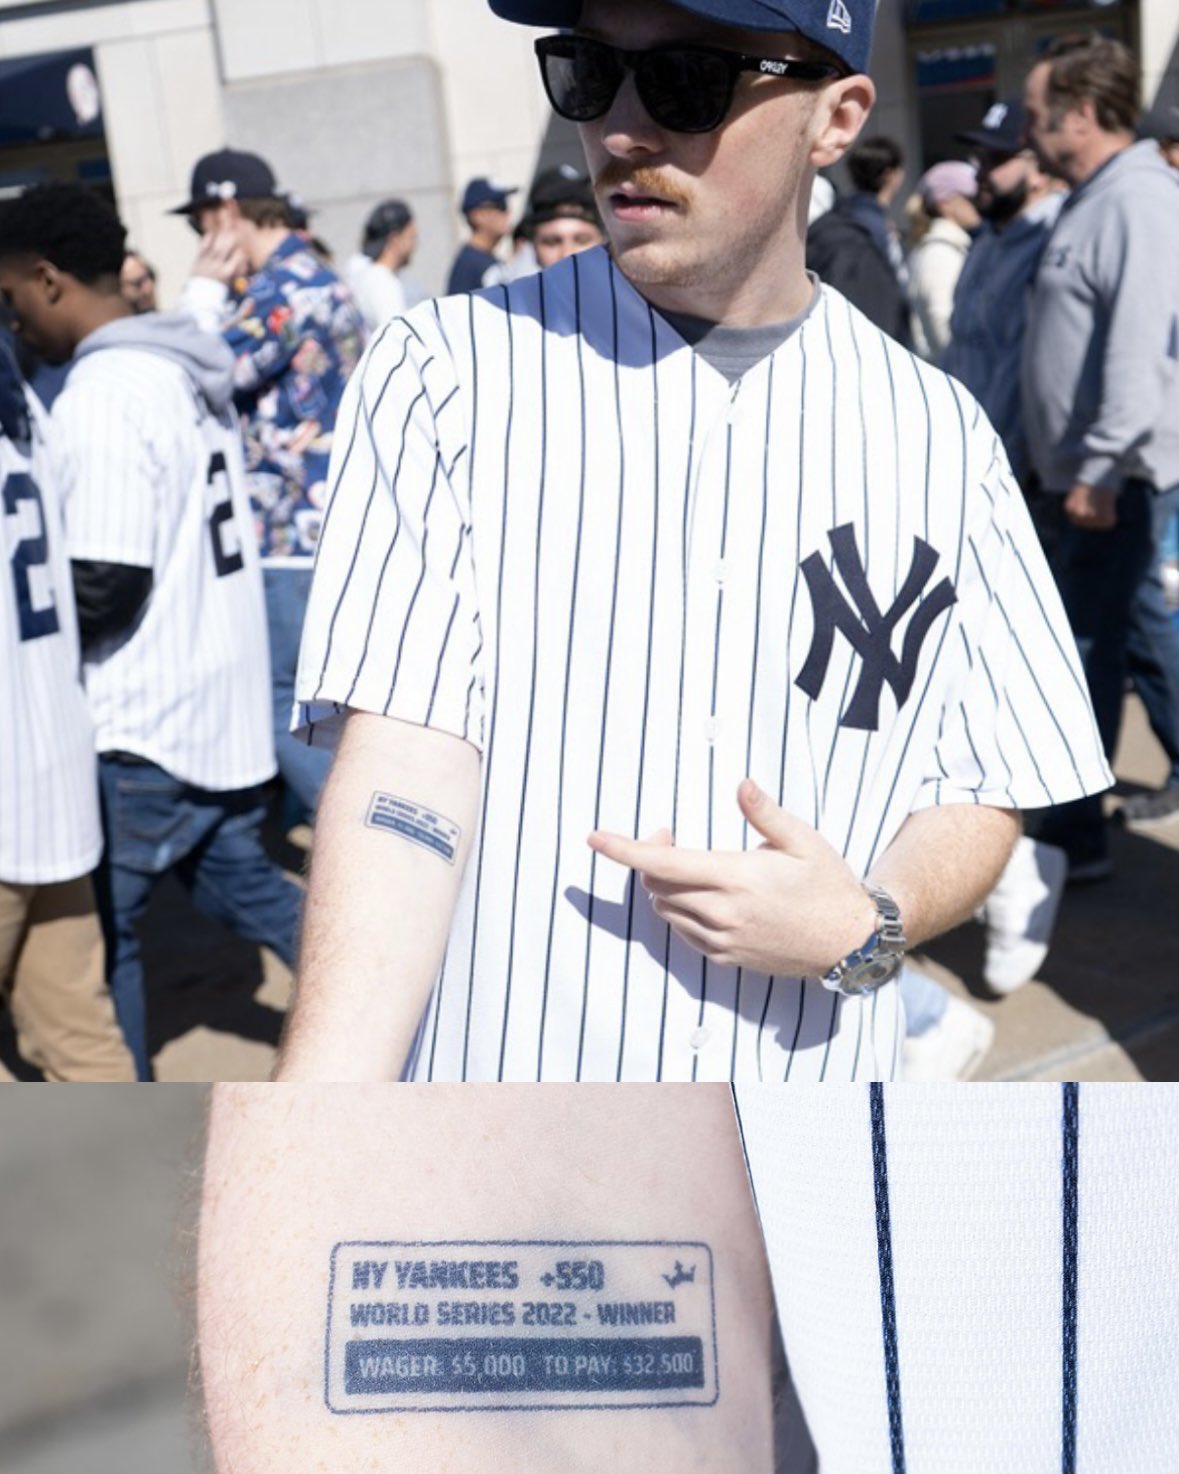 br_betting on X: Bro got his Yankees World Series future tattooed on his  arm 😭 (via @DKSportsbook)  / X